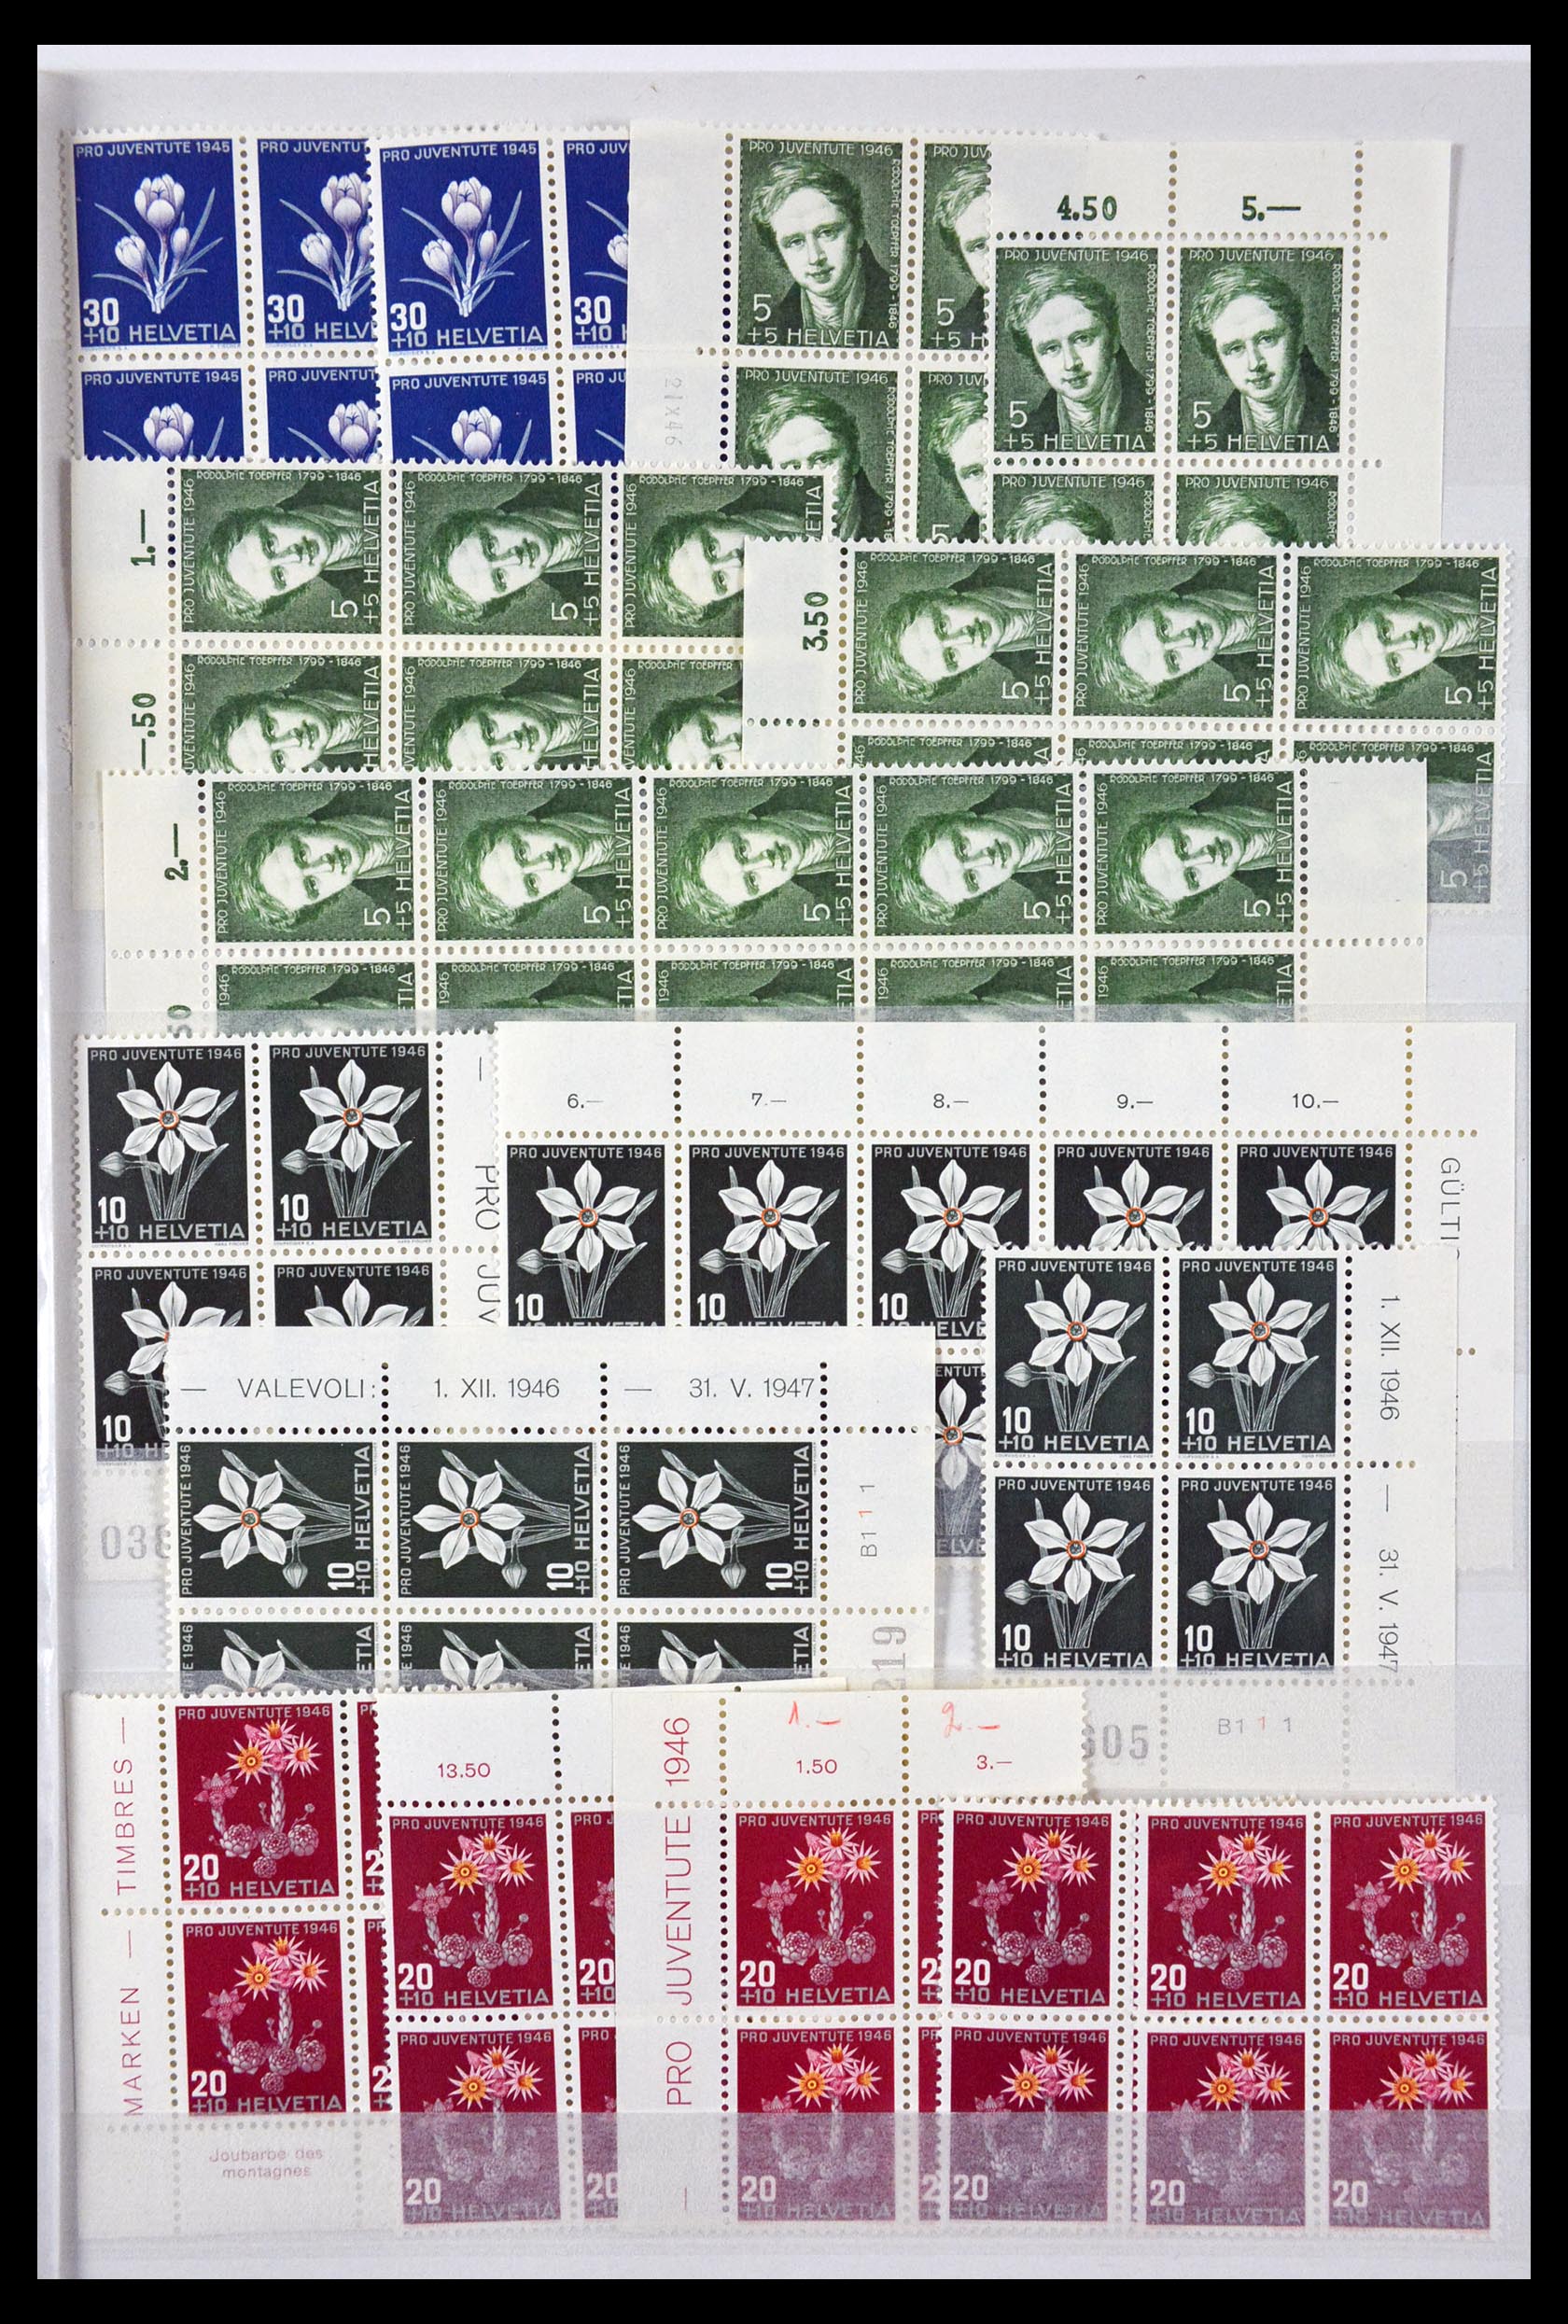 29604 163 - 29604 Switzerland 1882-1960.